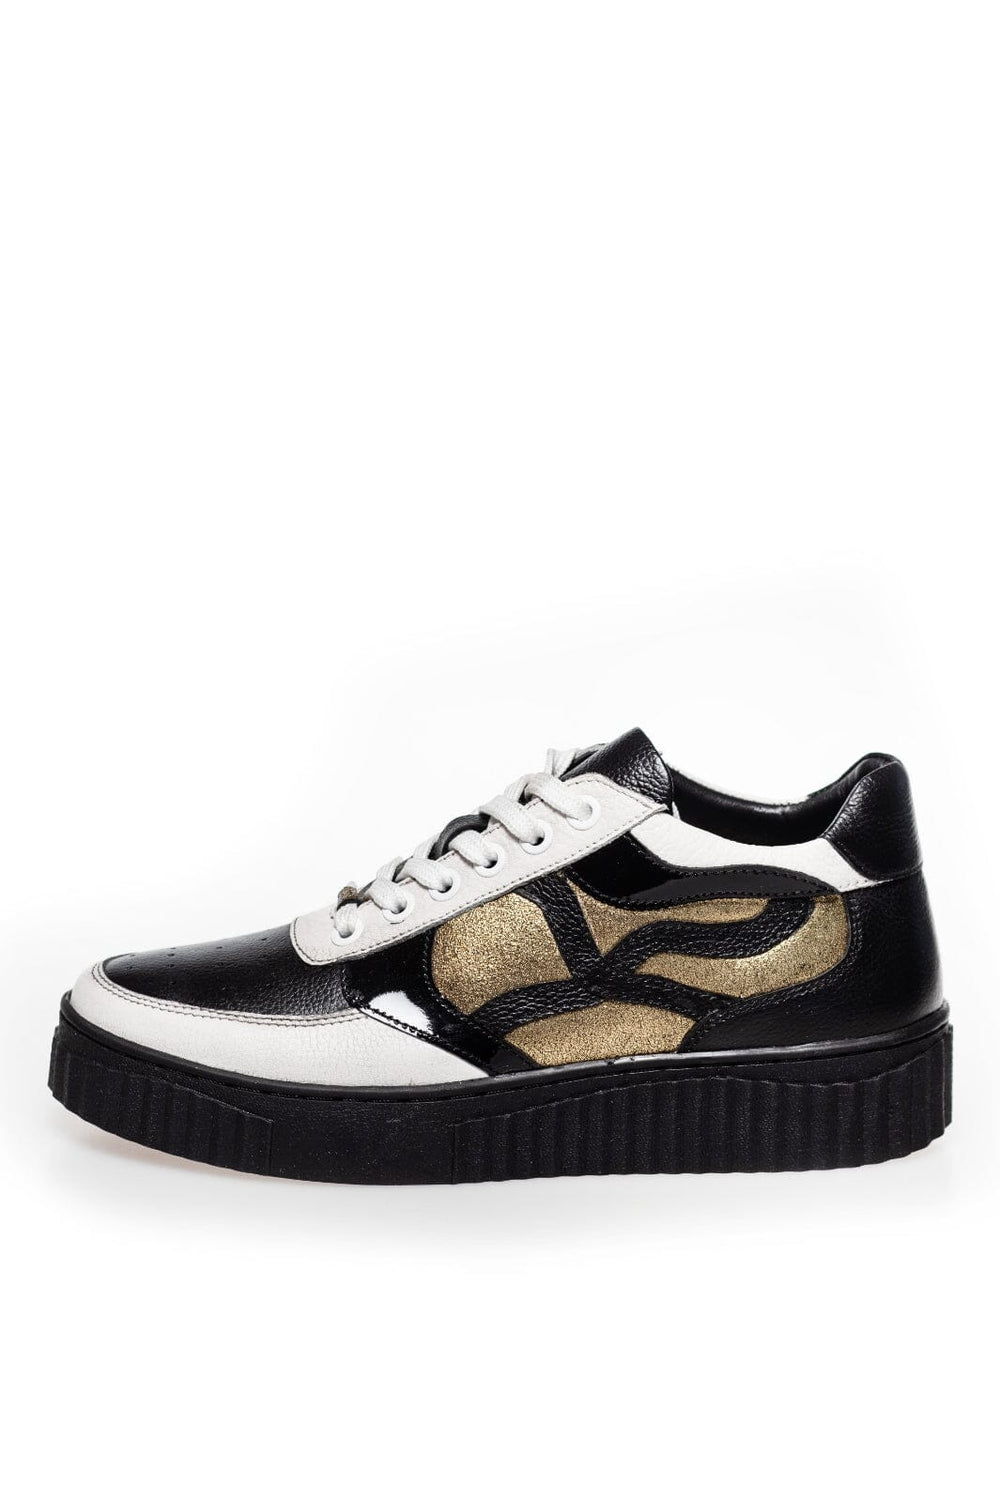 Forudbestilling - Copenhagen Shoes - My Private Sneaks - 227 Black/White/Gold Sneakers 